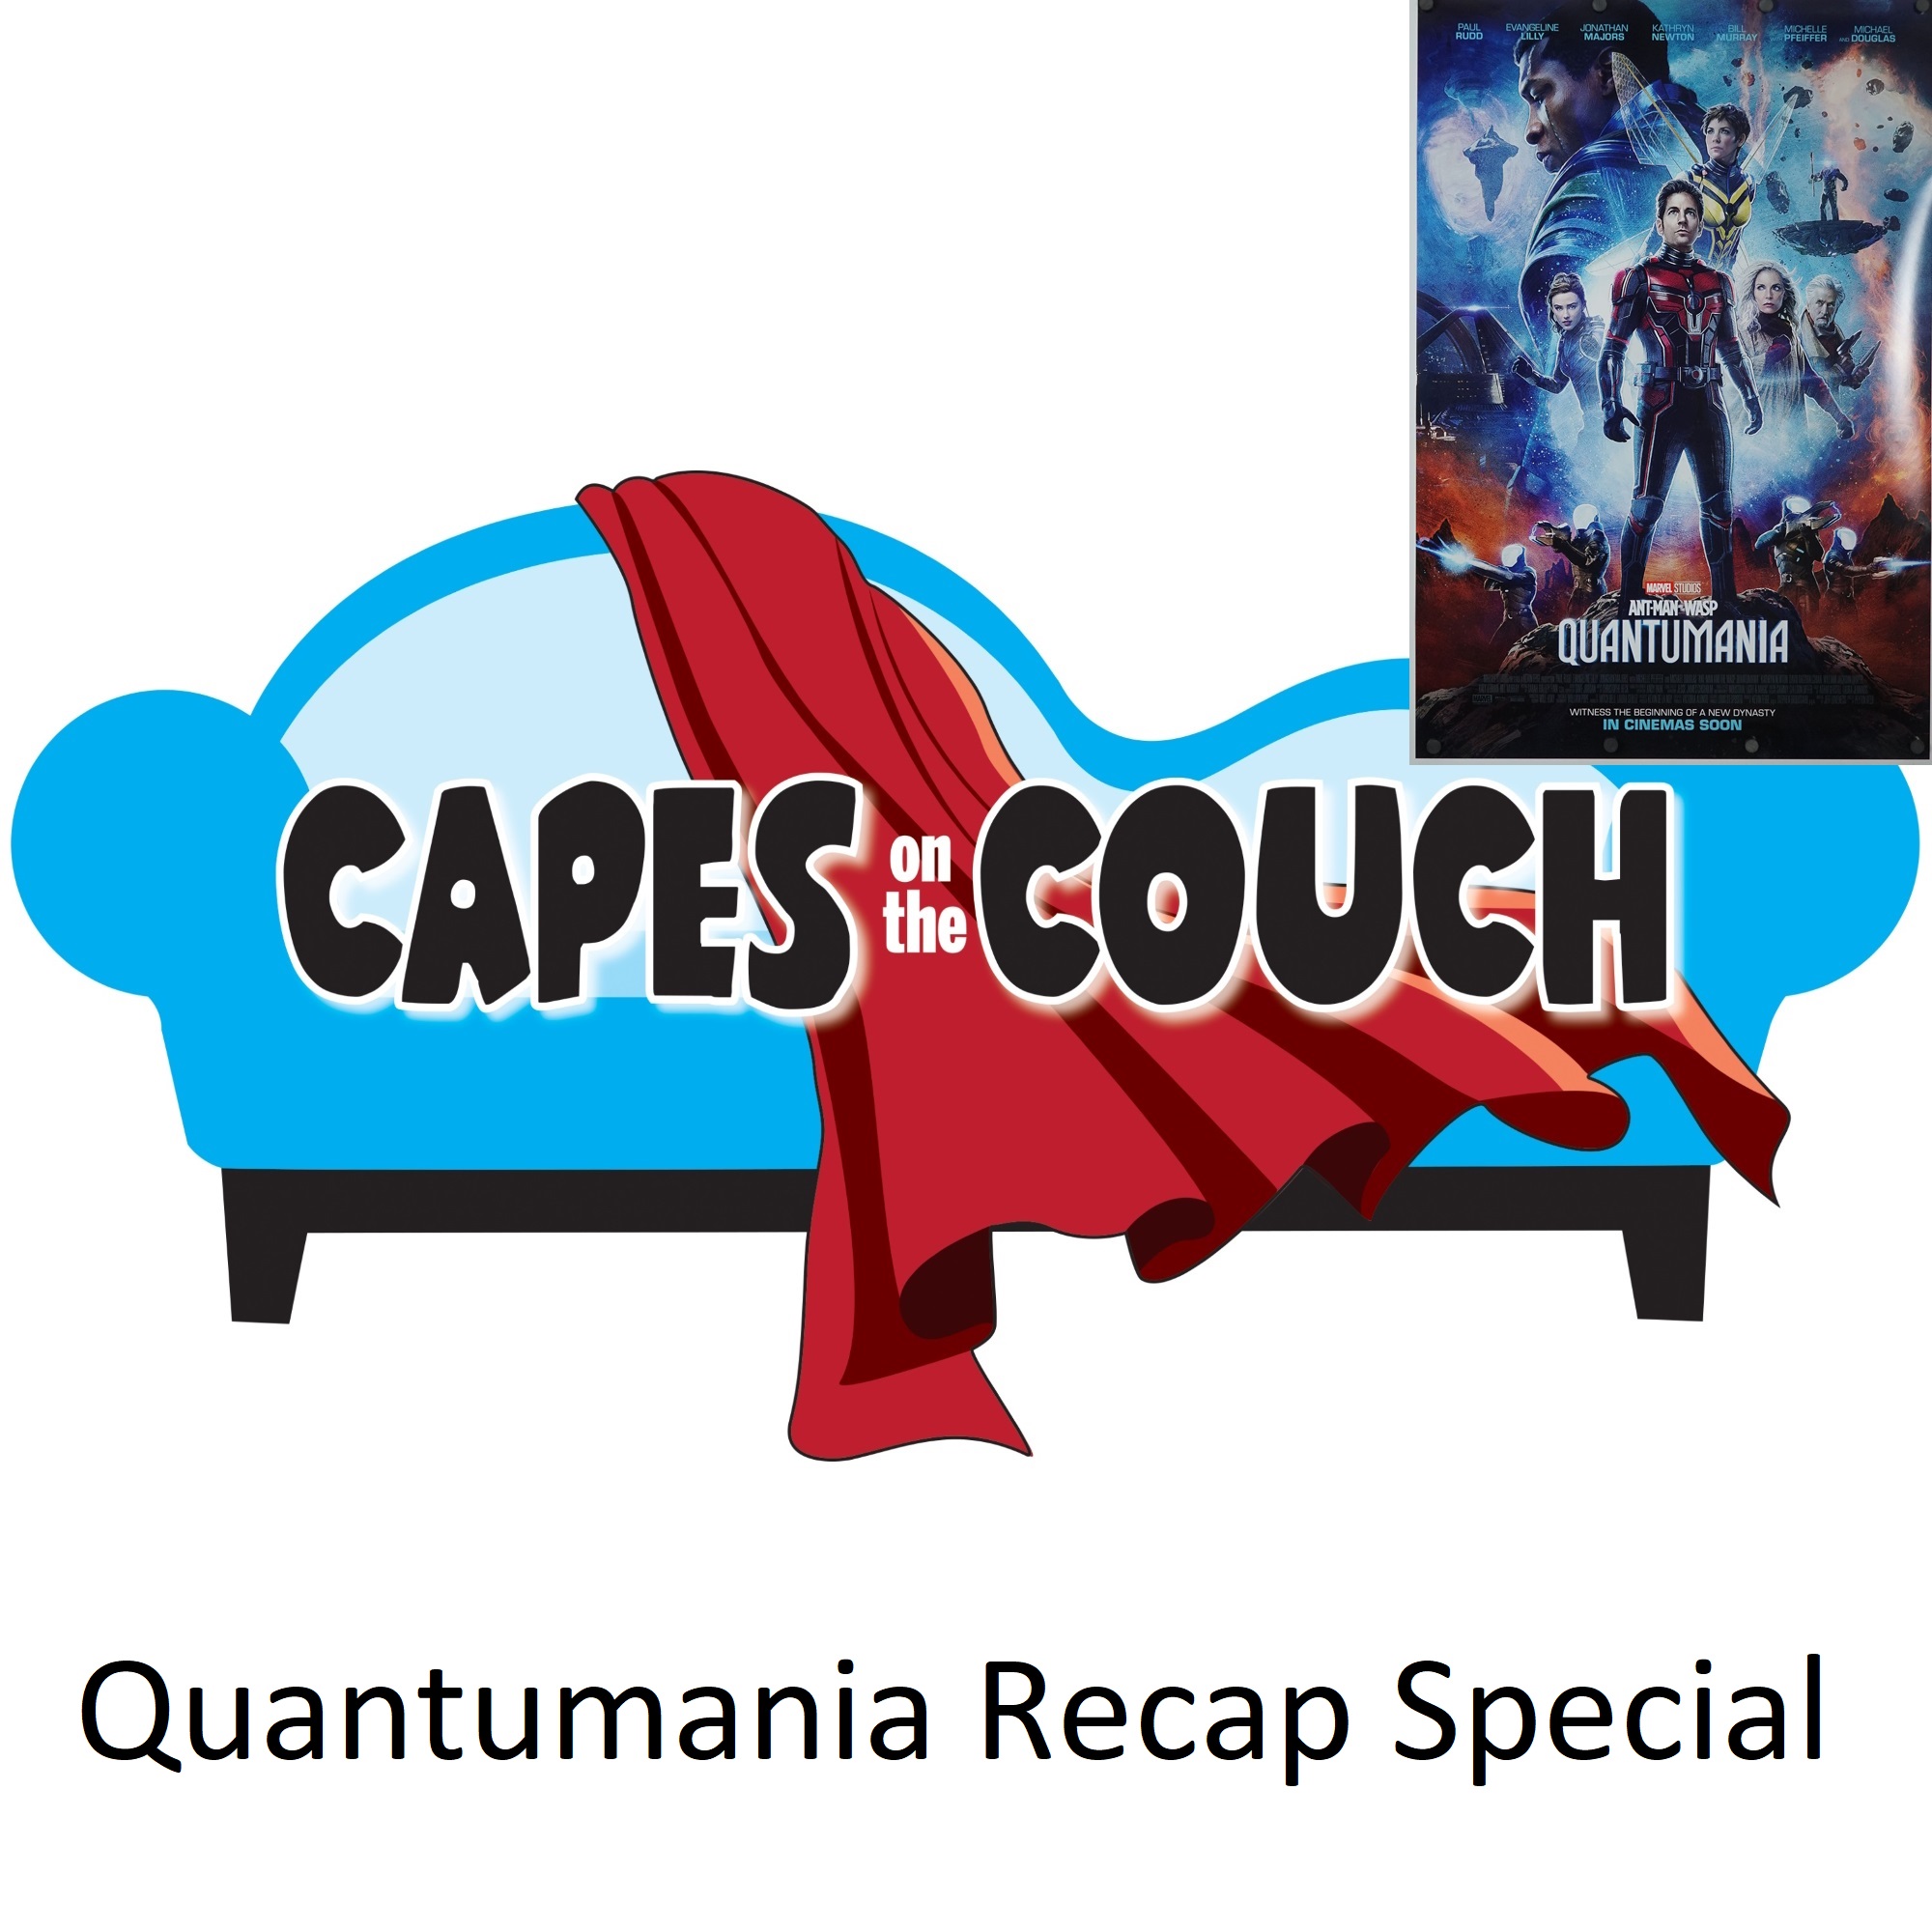 Quantumania Recap Special post thumbnail image